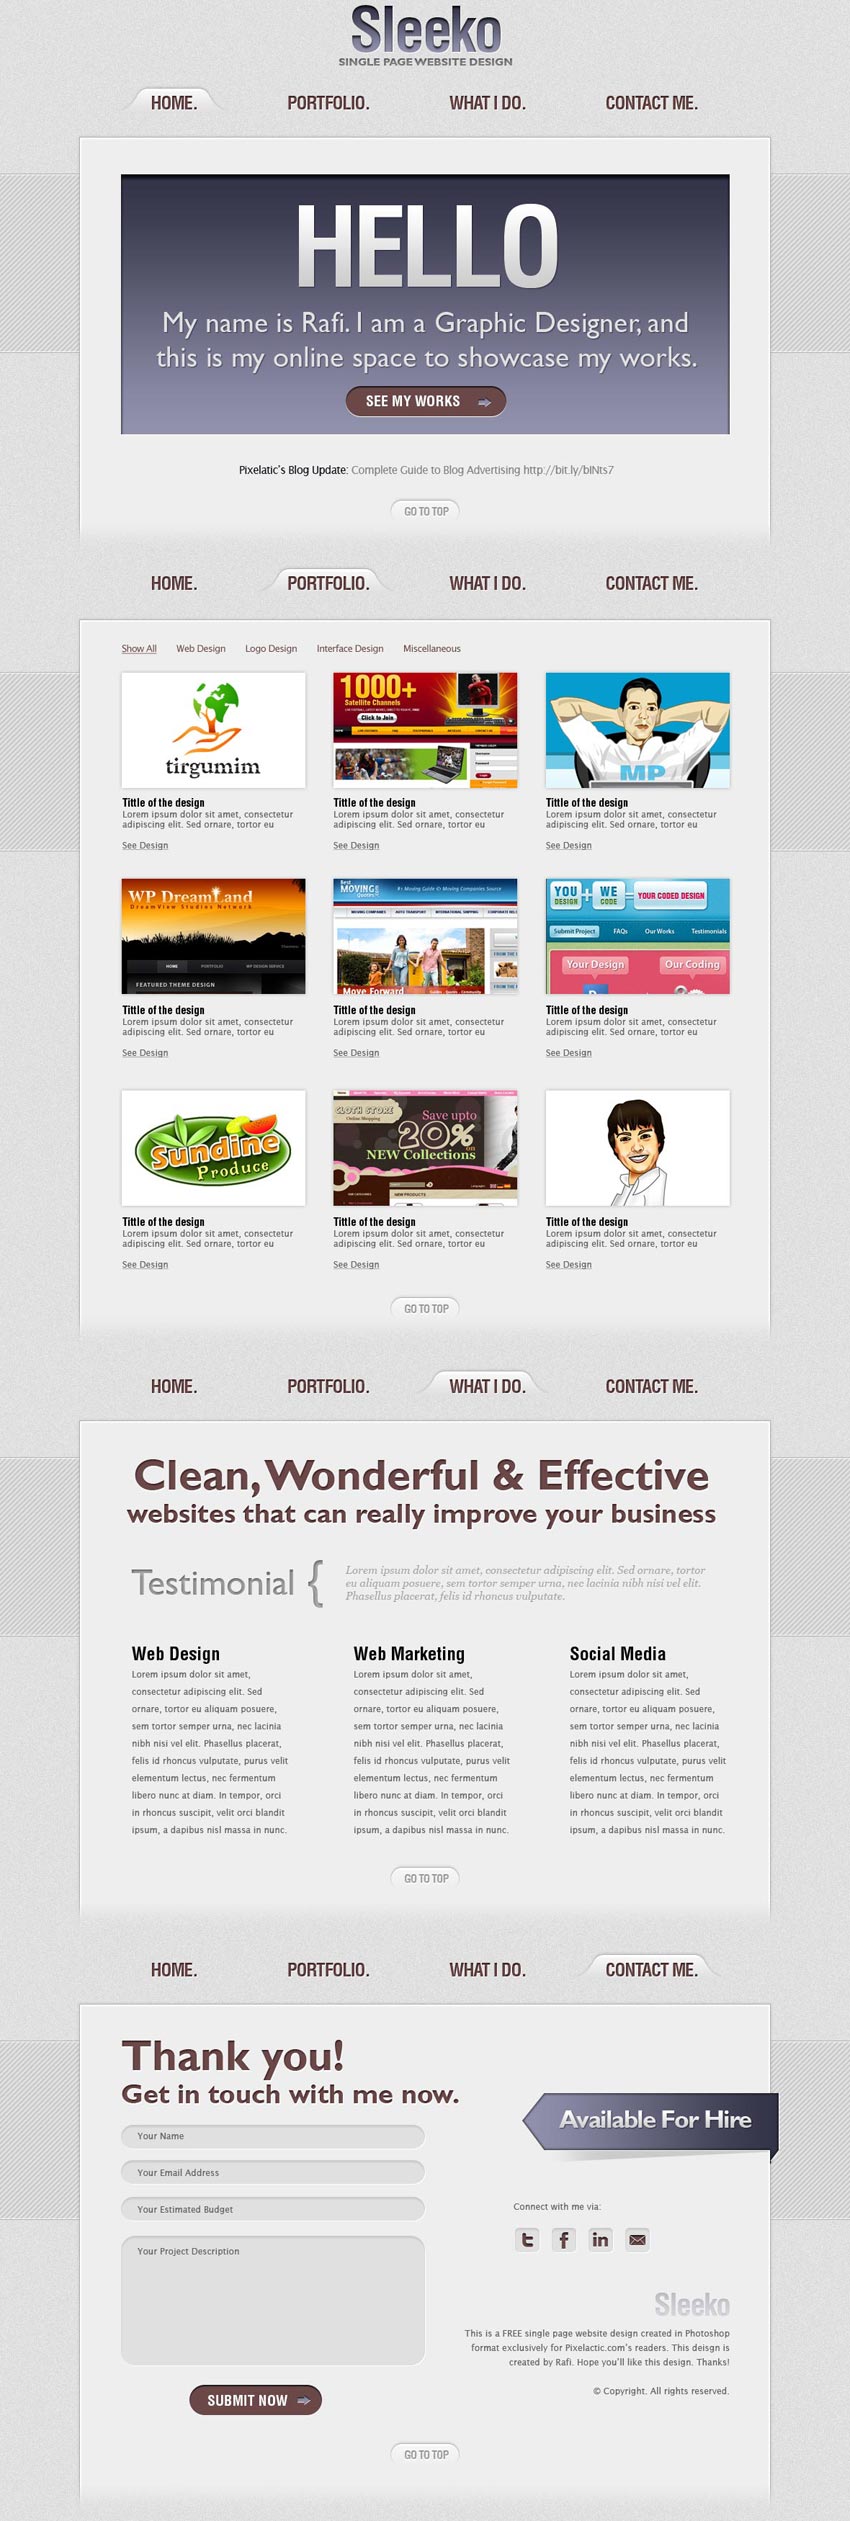 sleeko网页设计工作室个人网站模板PSD素材下载